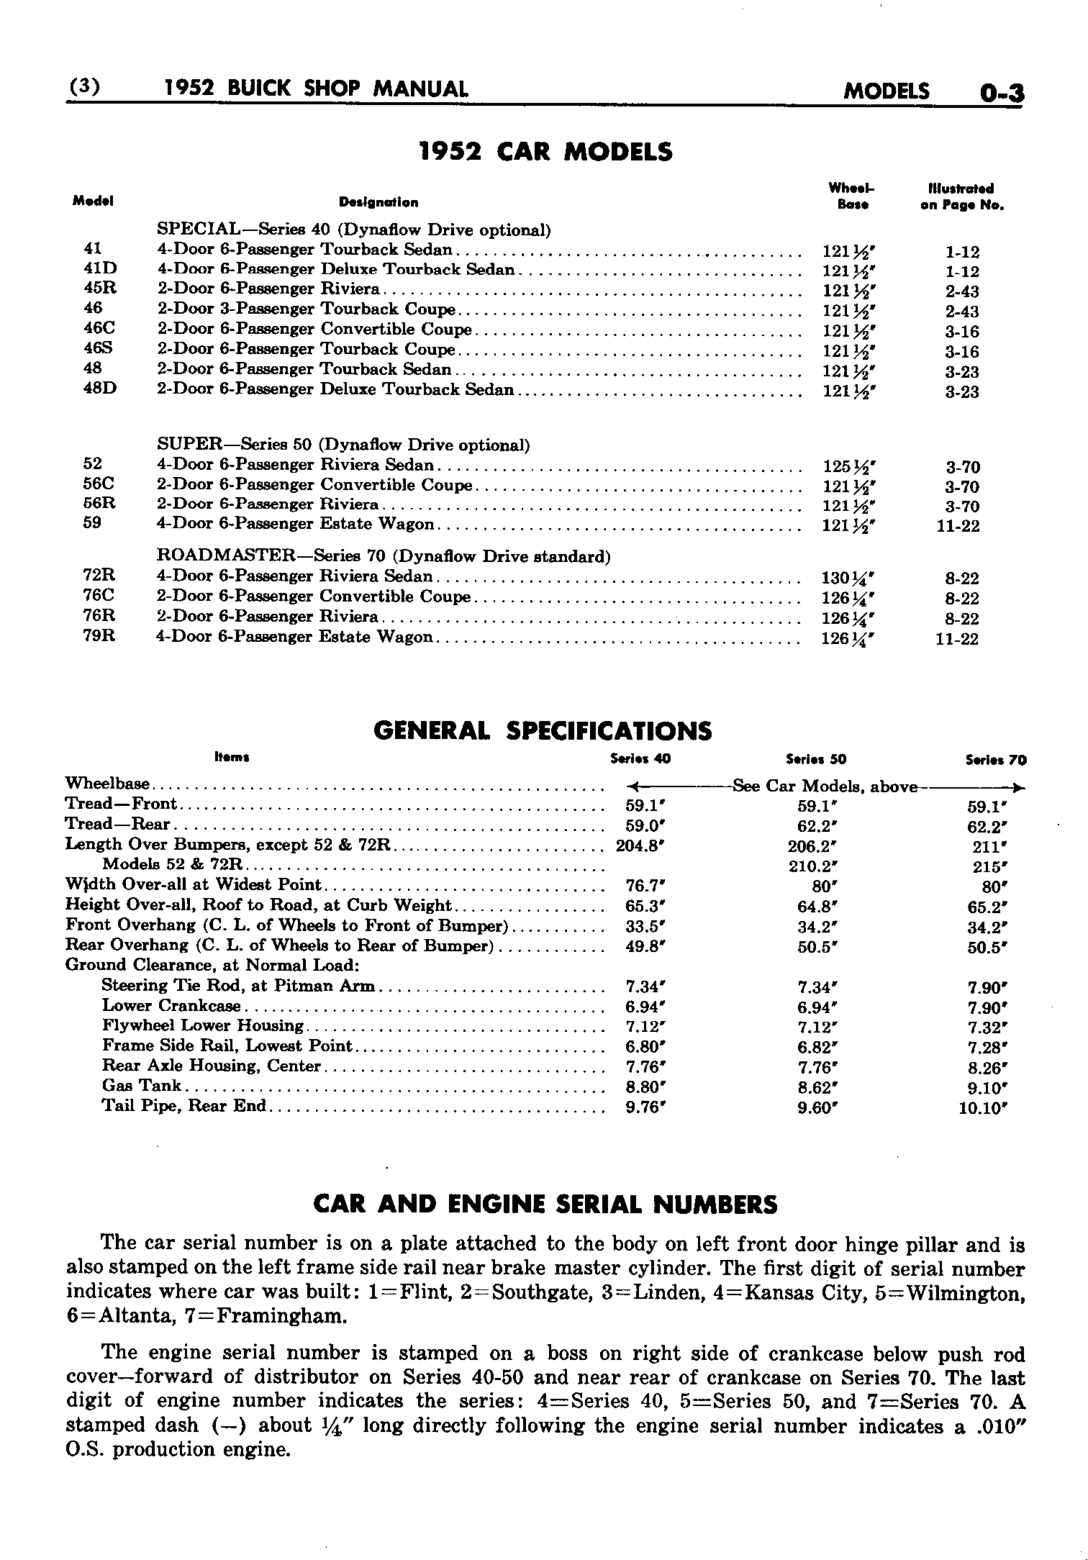 n_01 1952 Buick Shop Manual - Gen Information-004-004.jpg